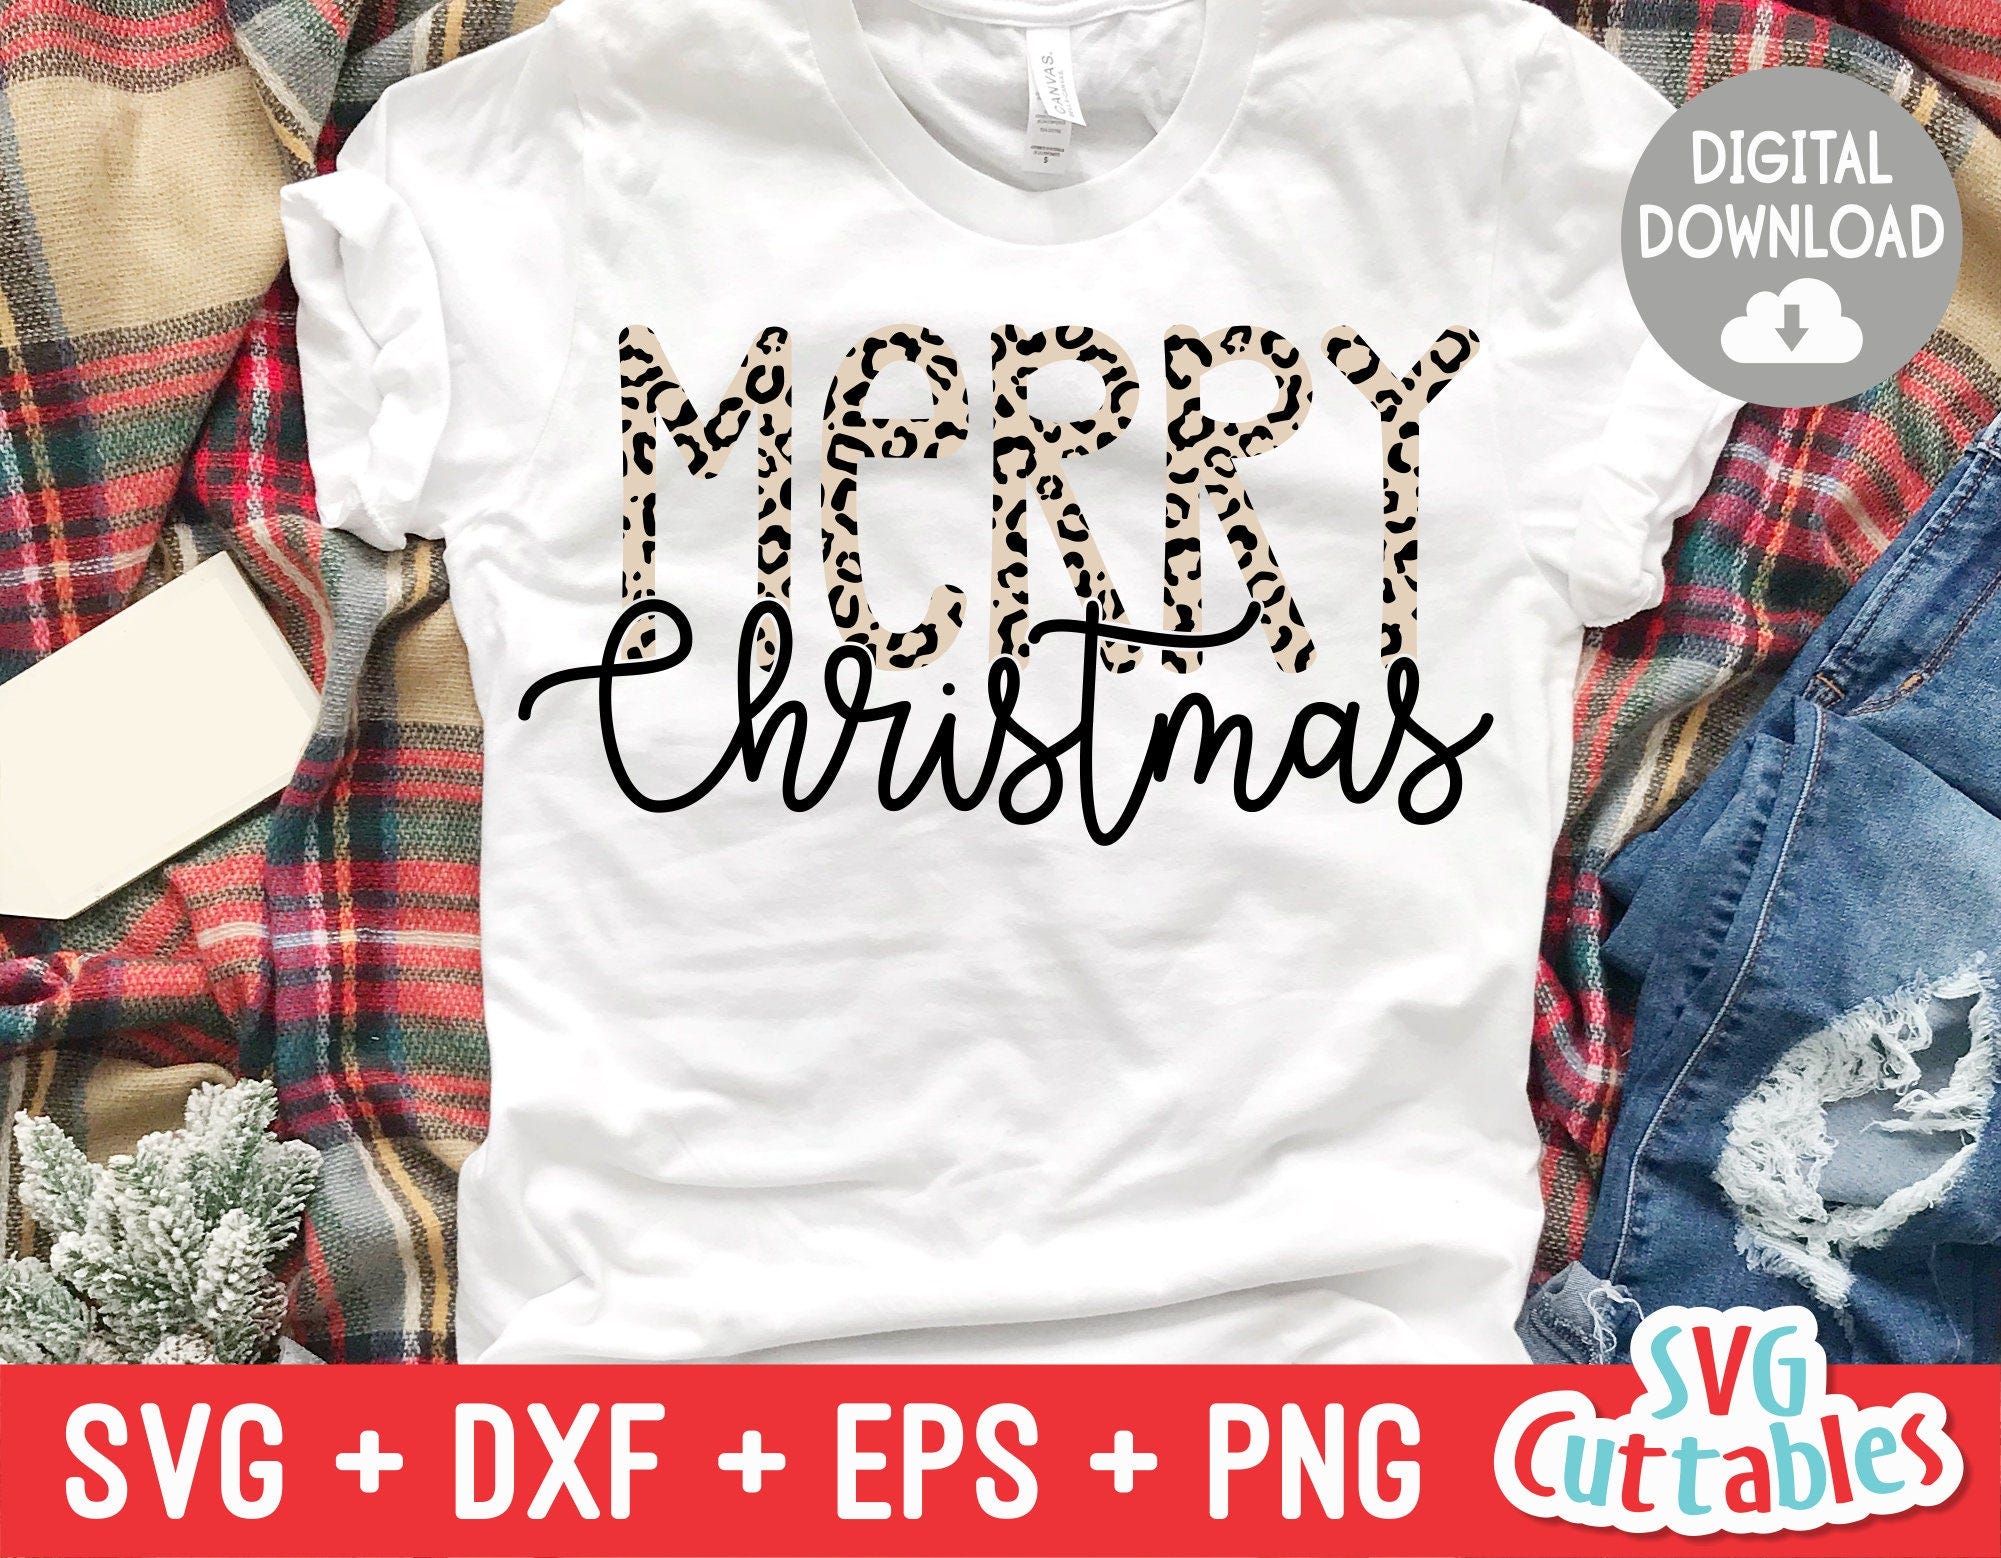 Merry Christmas svg - Christmas svg - Cut File - svg - eps - dxf - png - Leopard Print - Plaid - Silhouette - Cricut file - Digital File